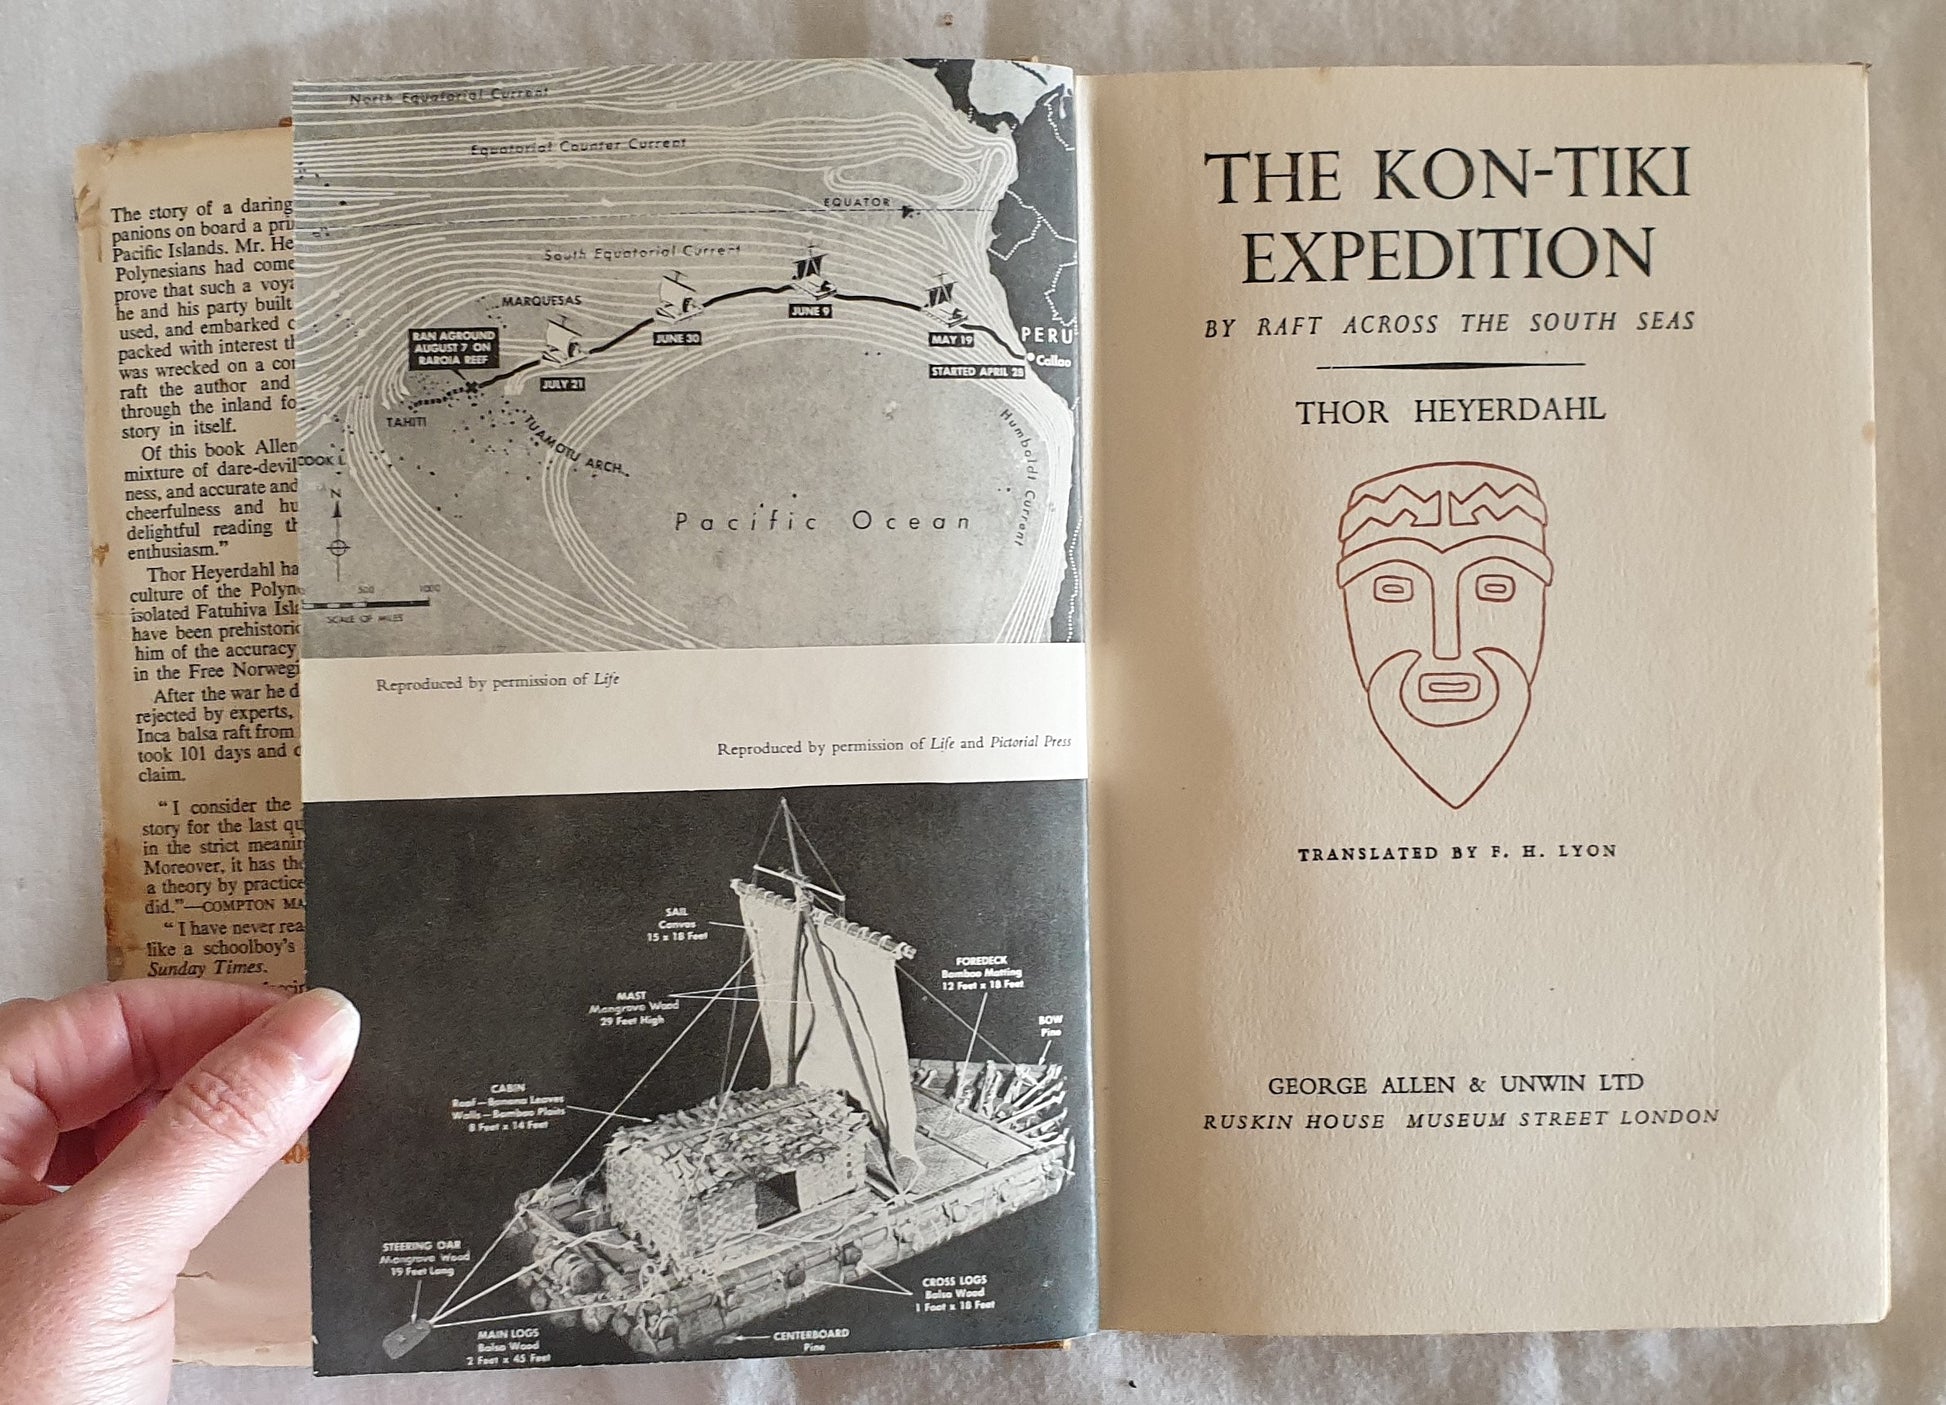 The Kon-Tiki Expedition  By Raft Across the South Seas  by Thor Heyerdahl